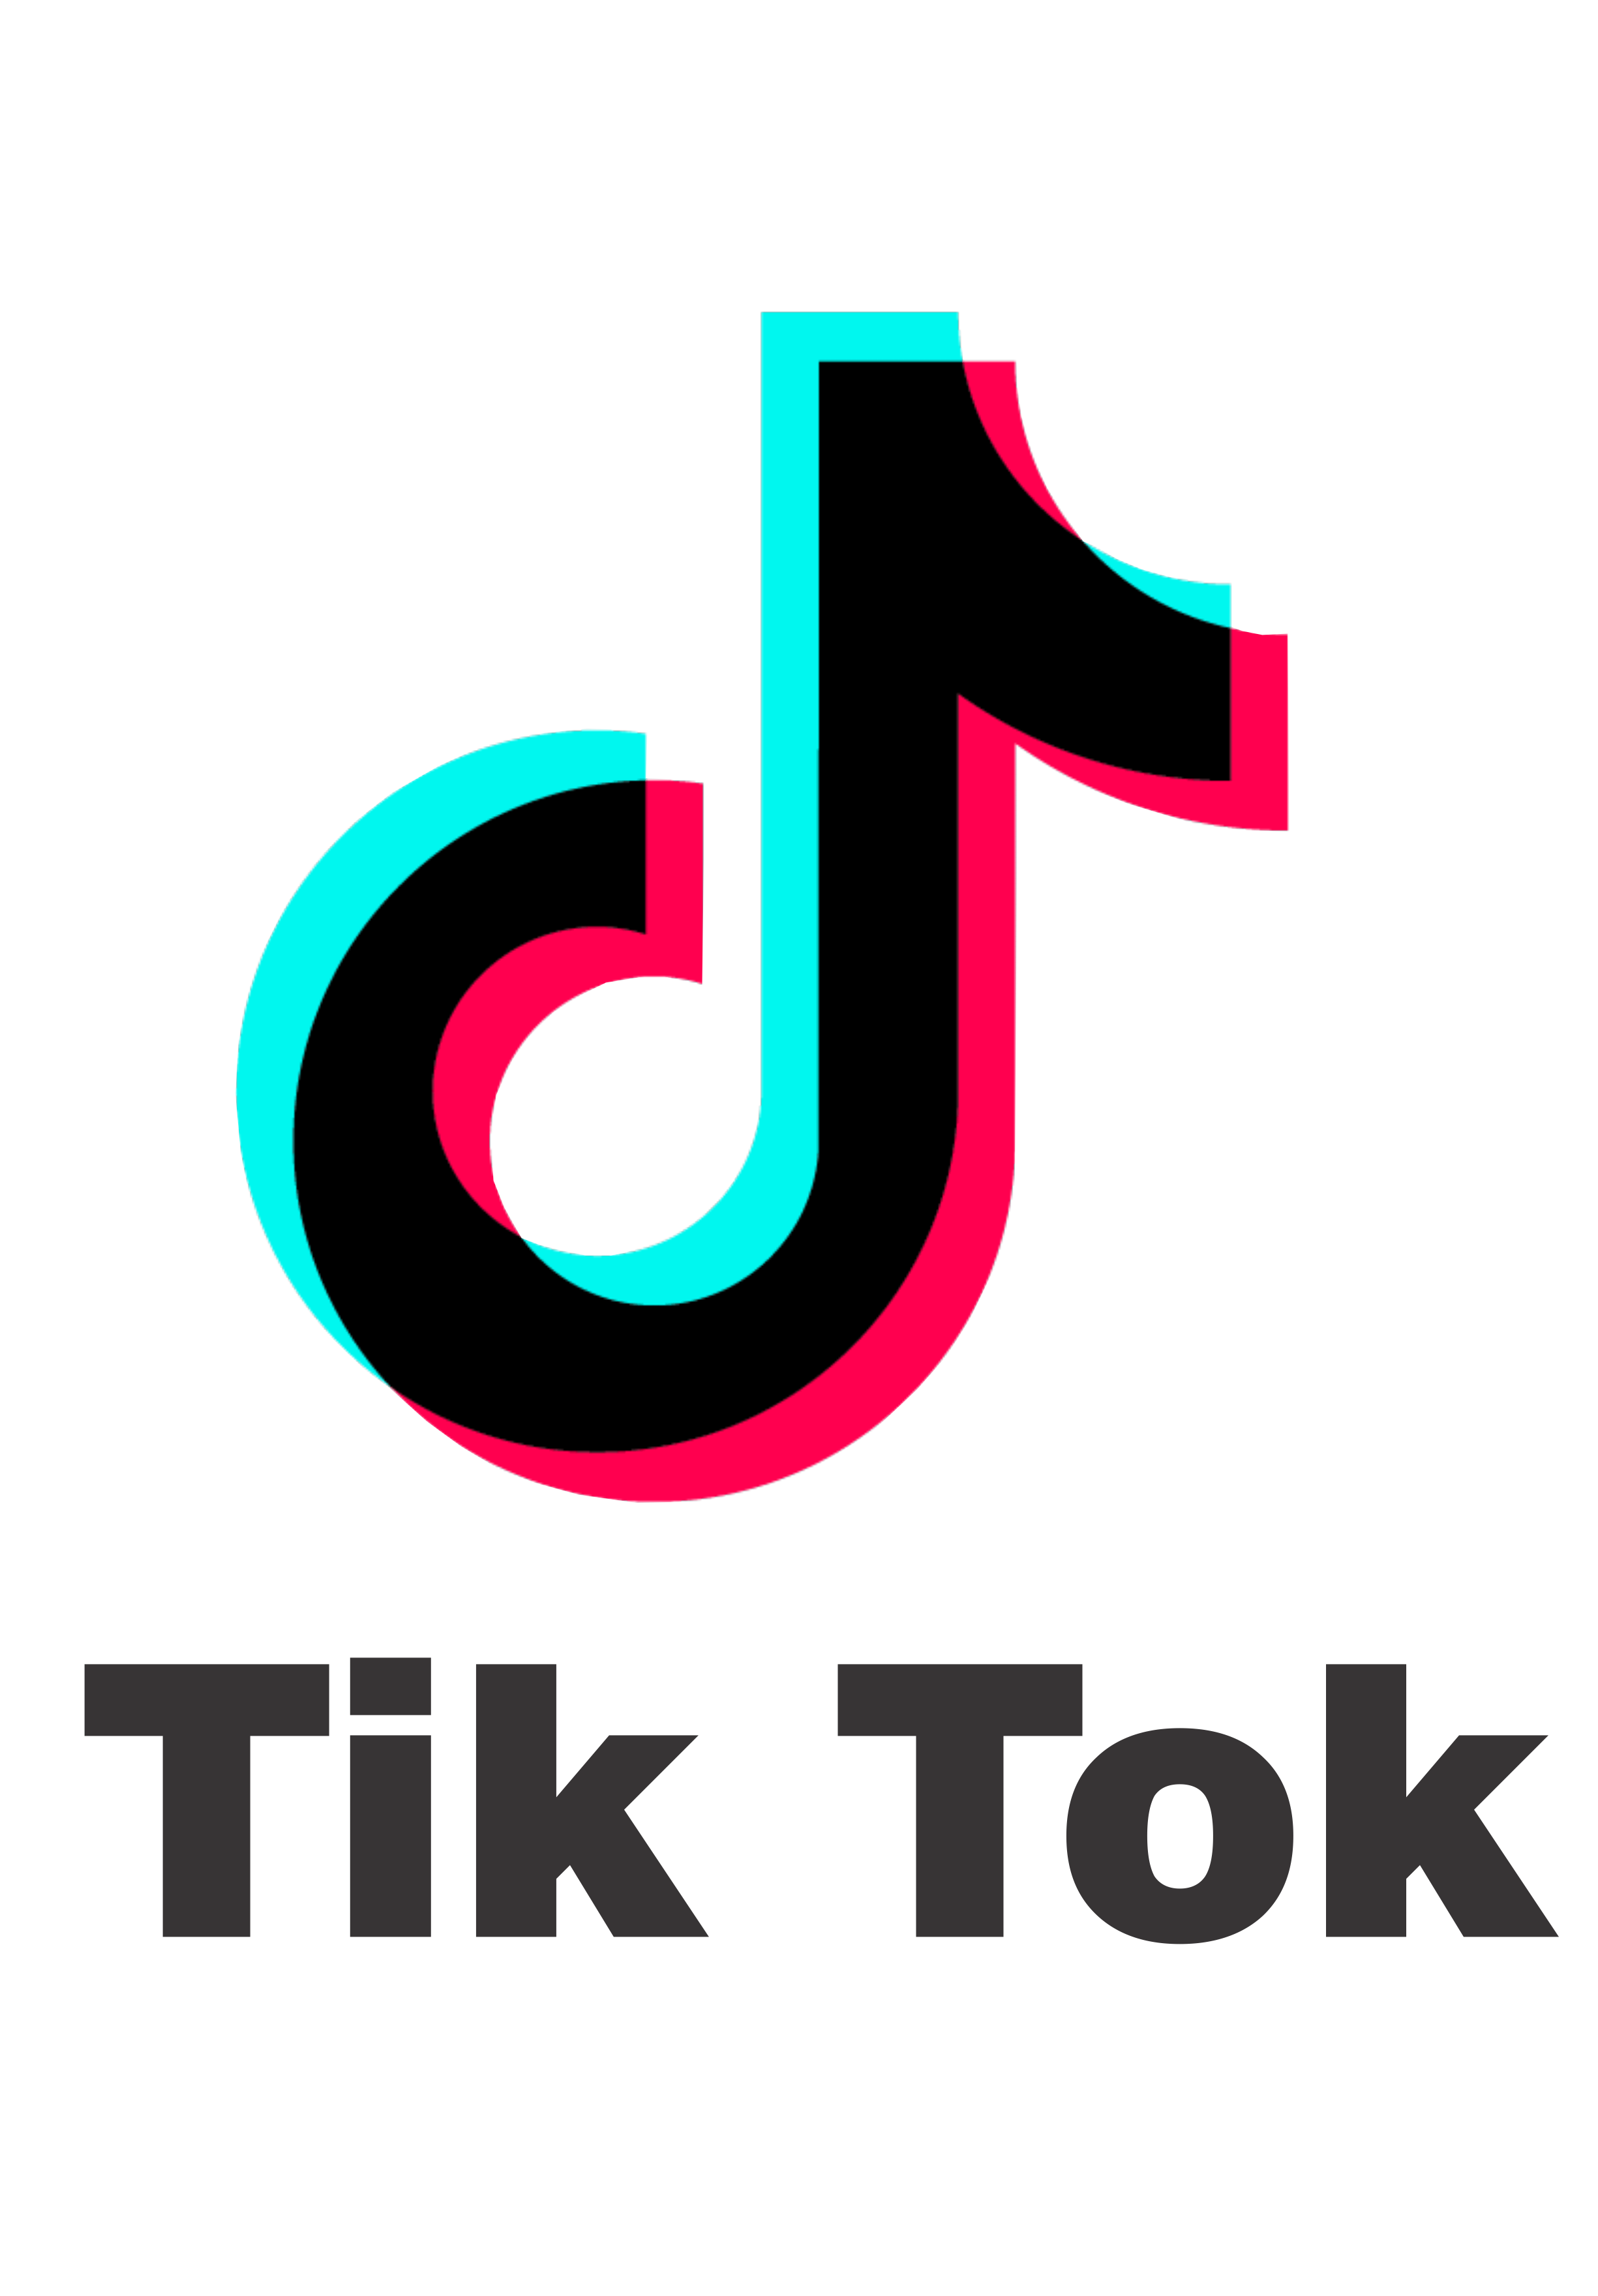 Tik Tok Logo - Tik Tok Logo Tiktok Logo Tik Tok Logo Tik Tok App 39D